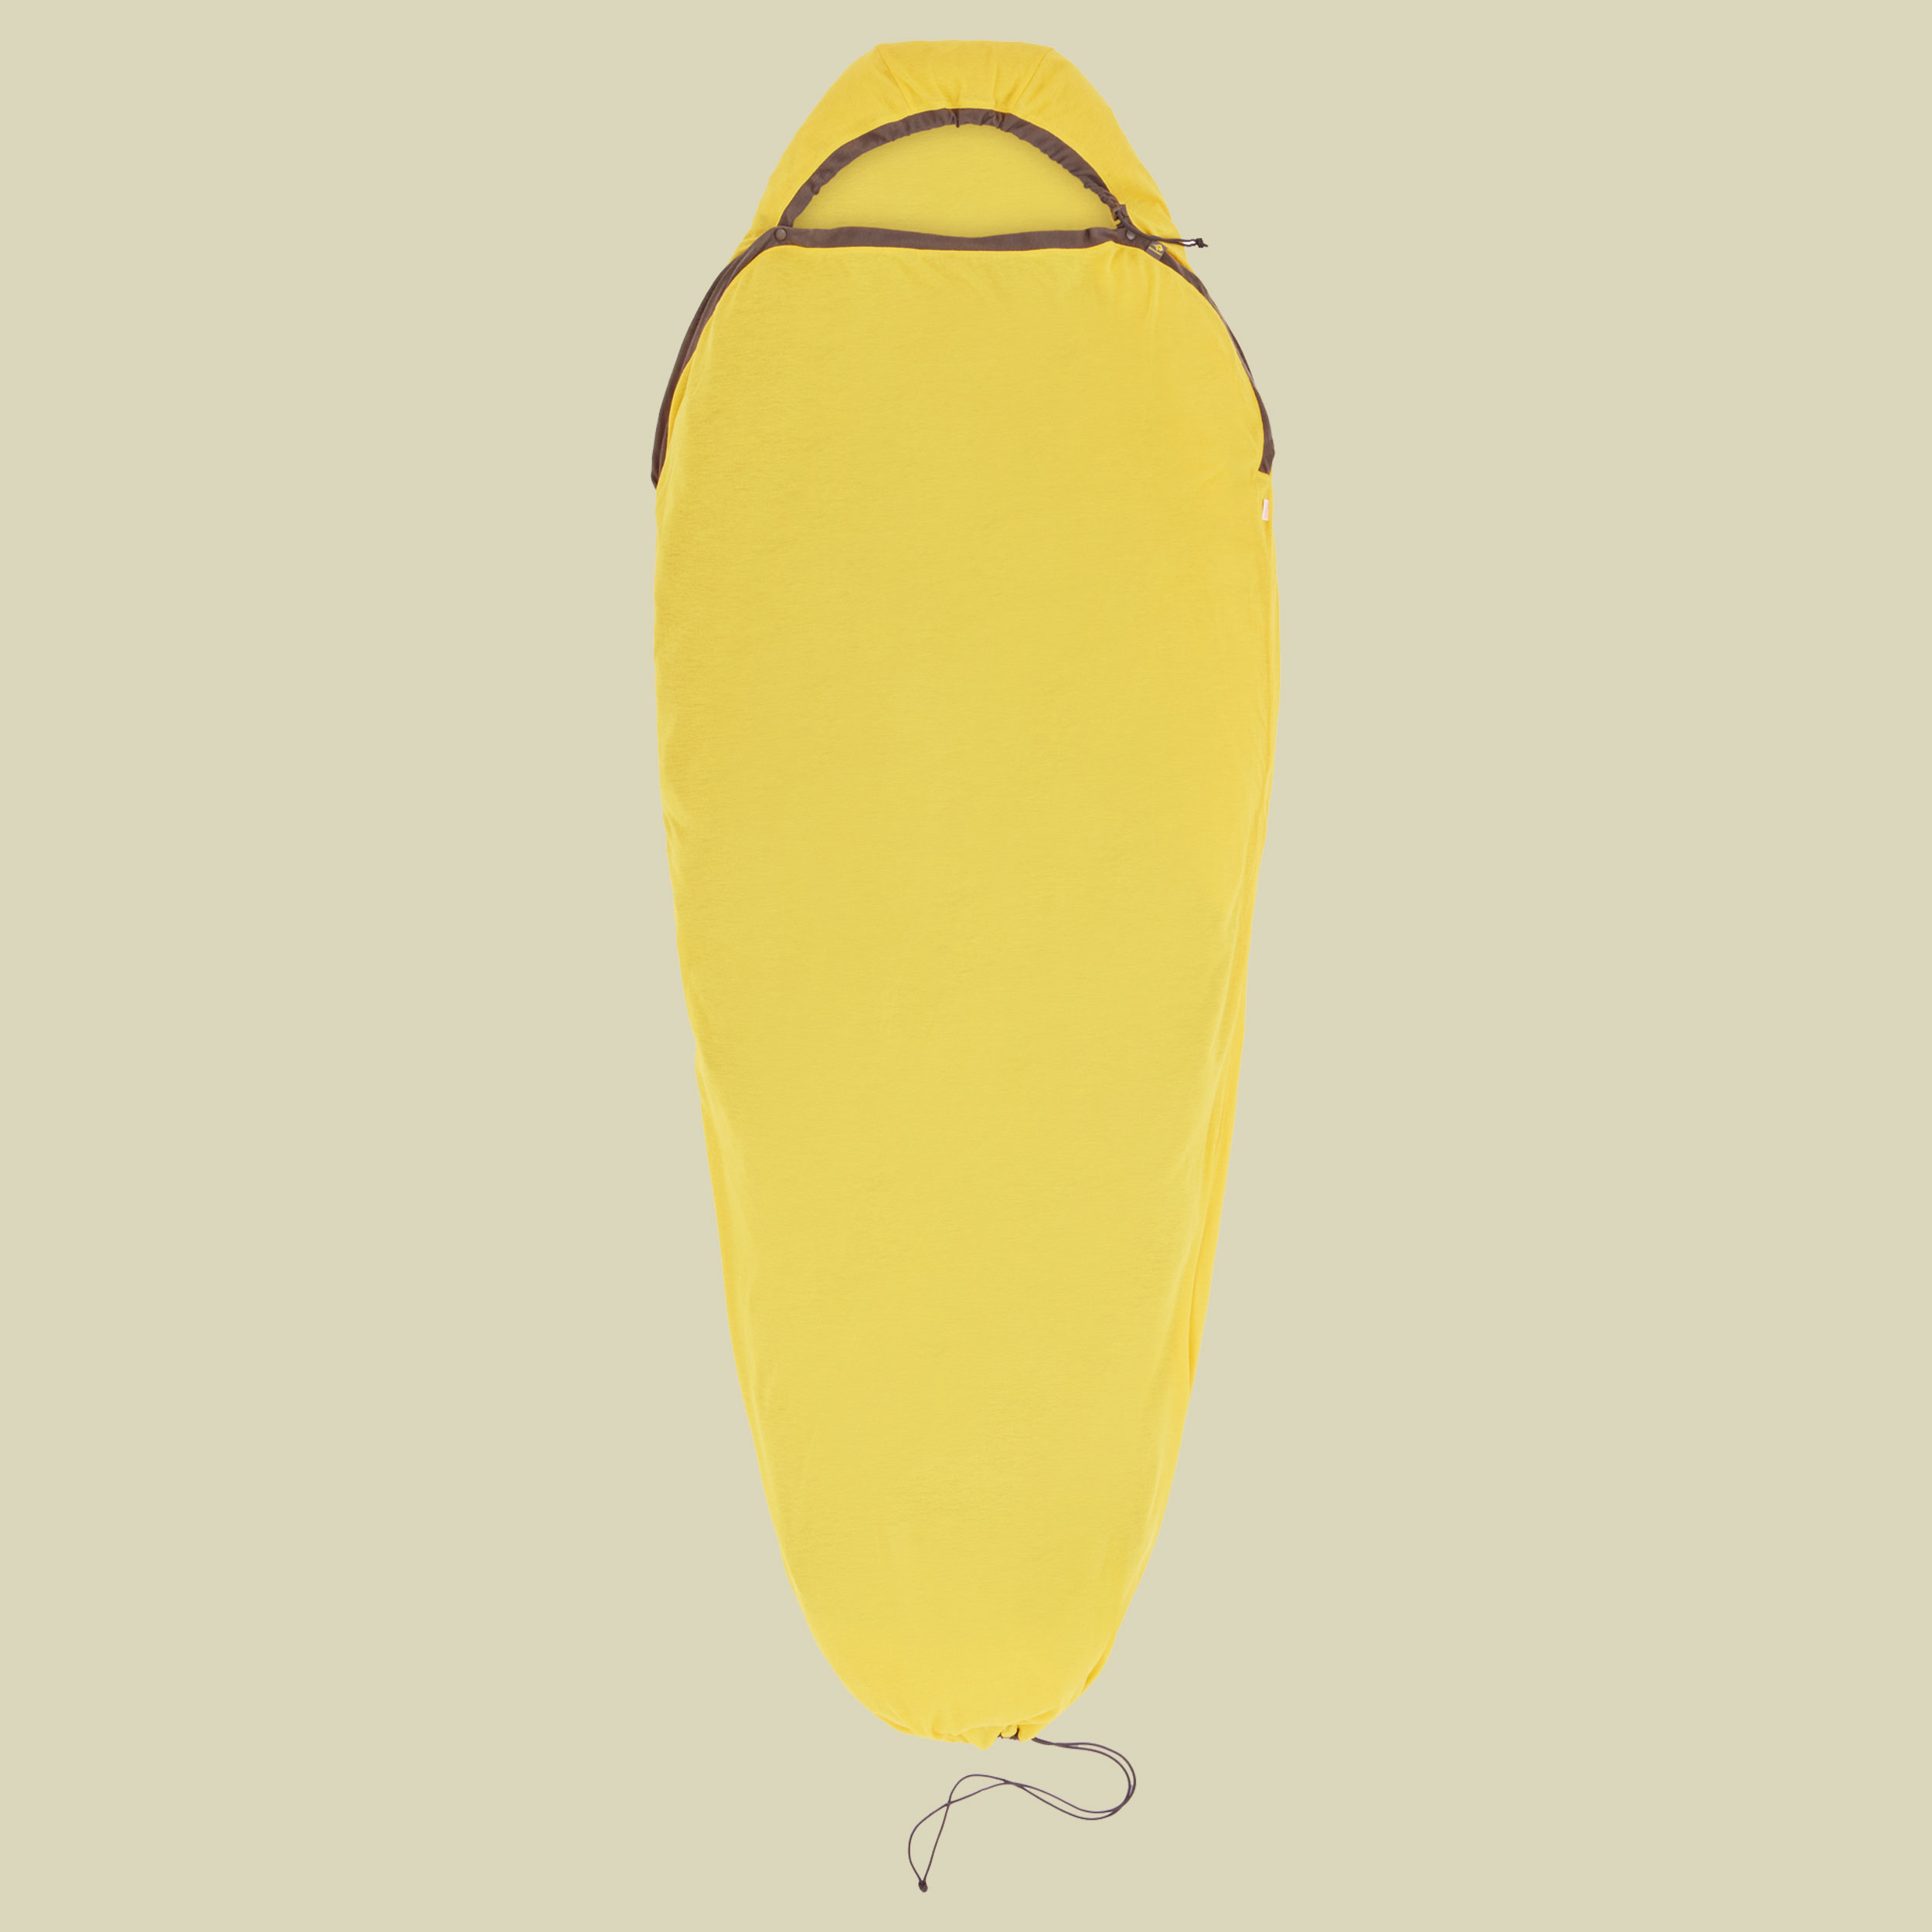 Reactor Sleeping Bag Liner - Mummy w/ Drawcord Standard gelb - sulfur yellow